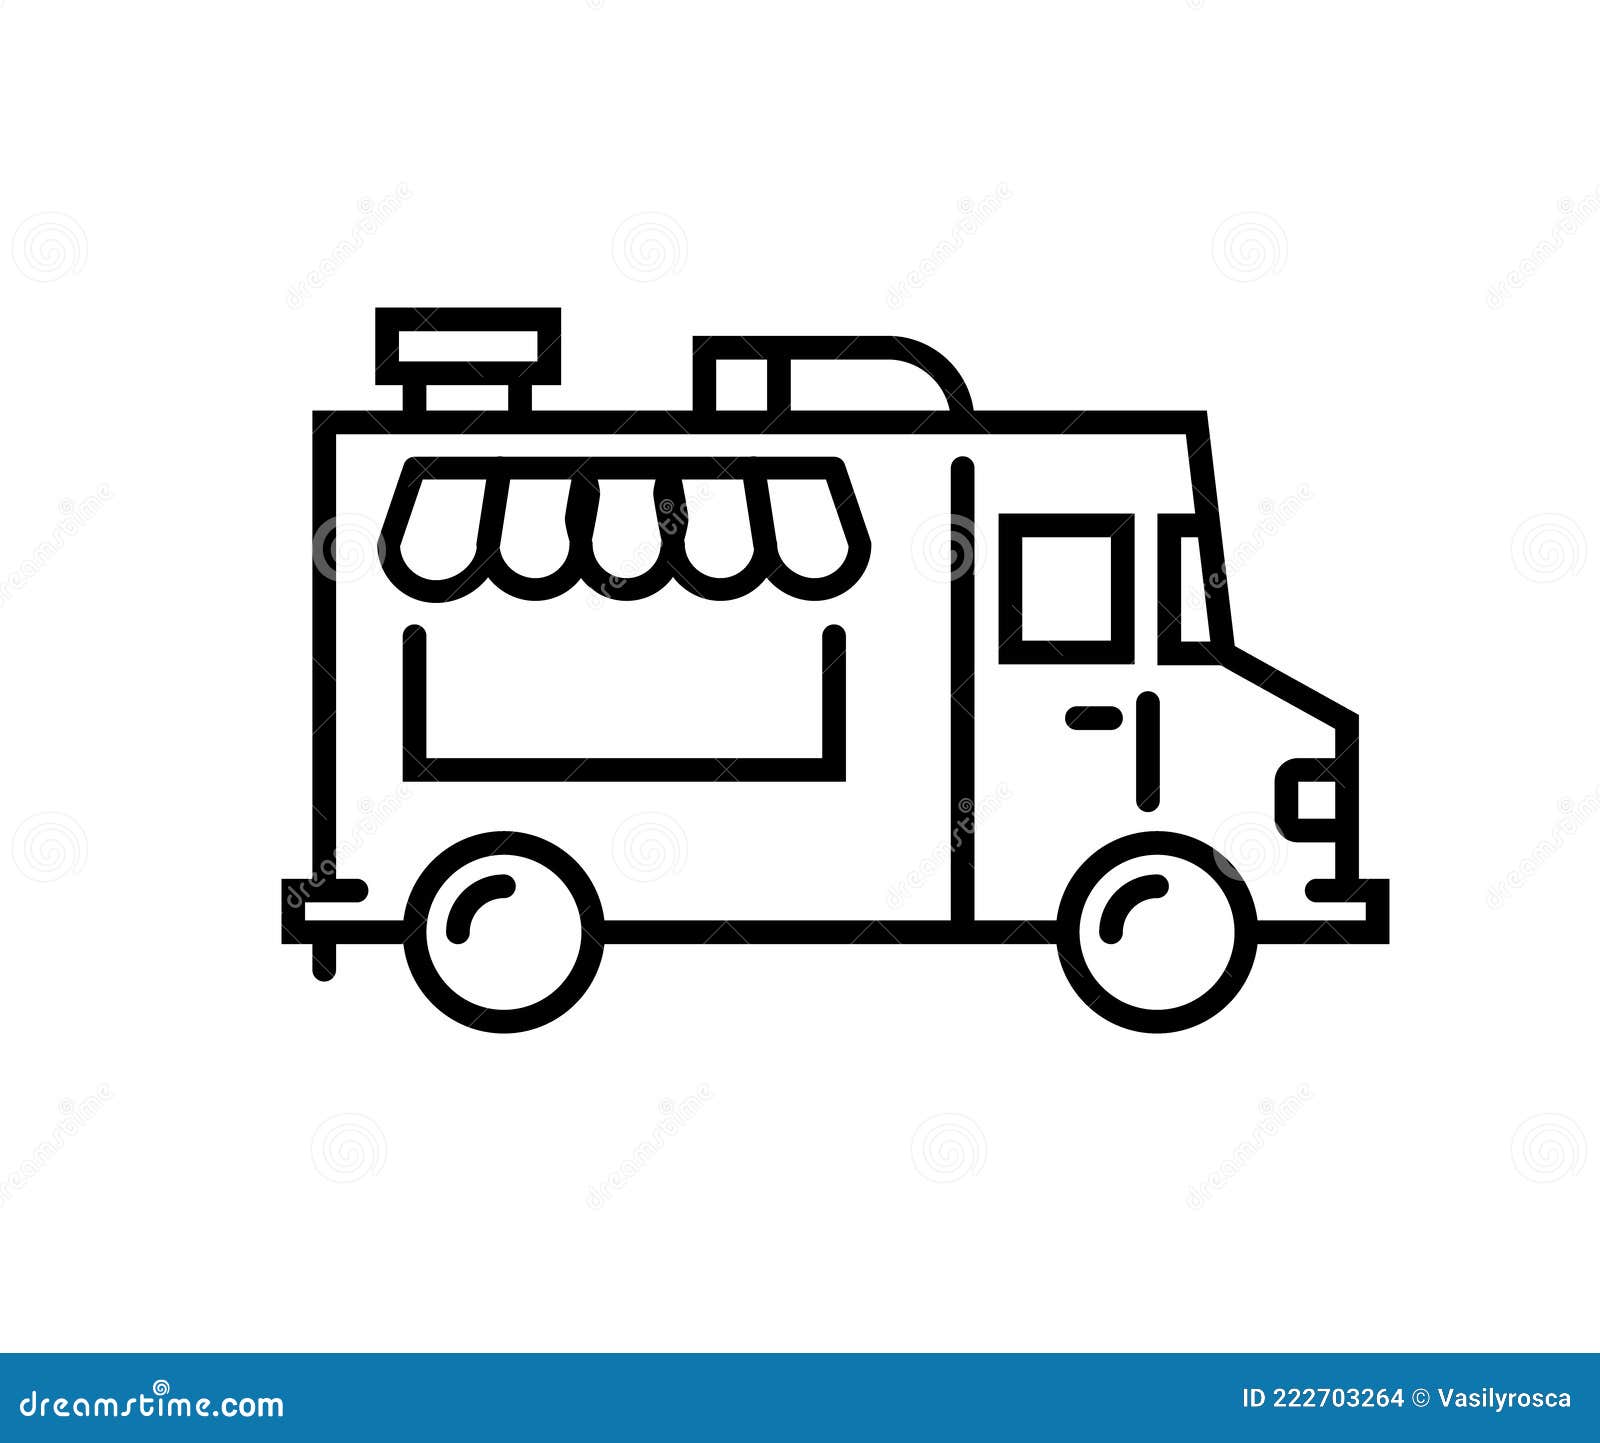 food truck logo line icon.  foodtruck kitchen street van  icon